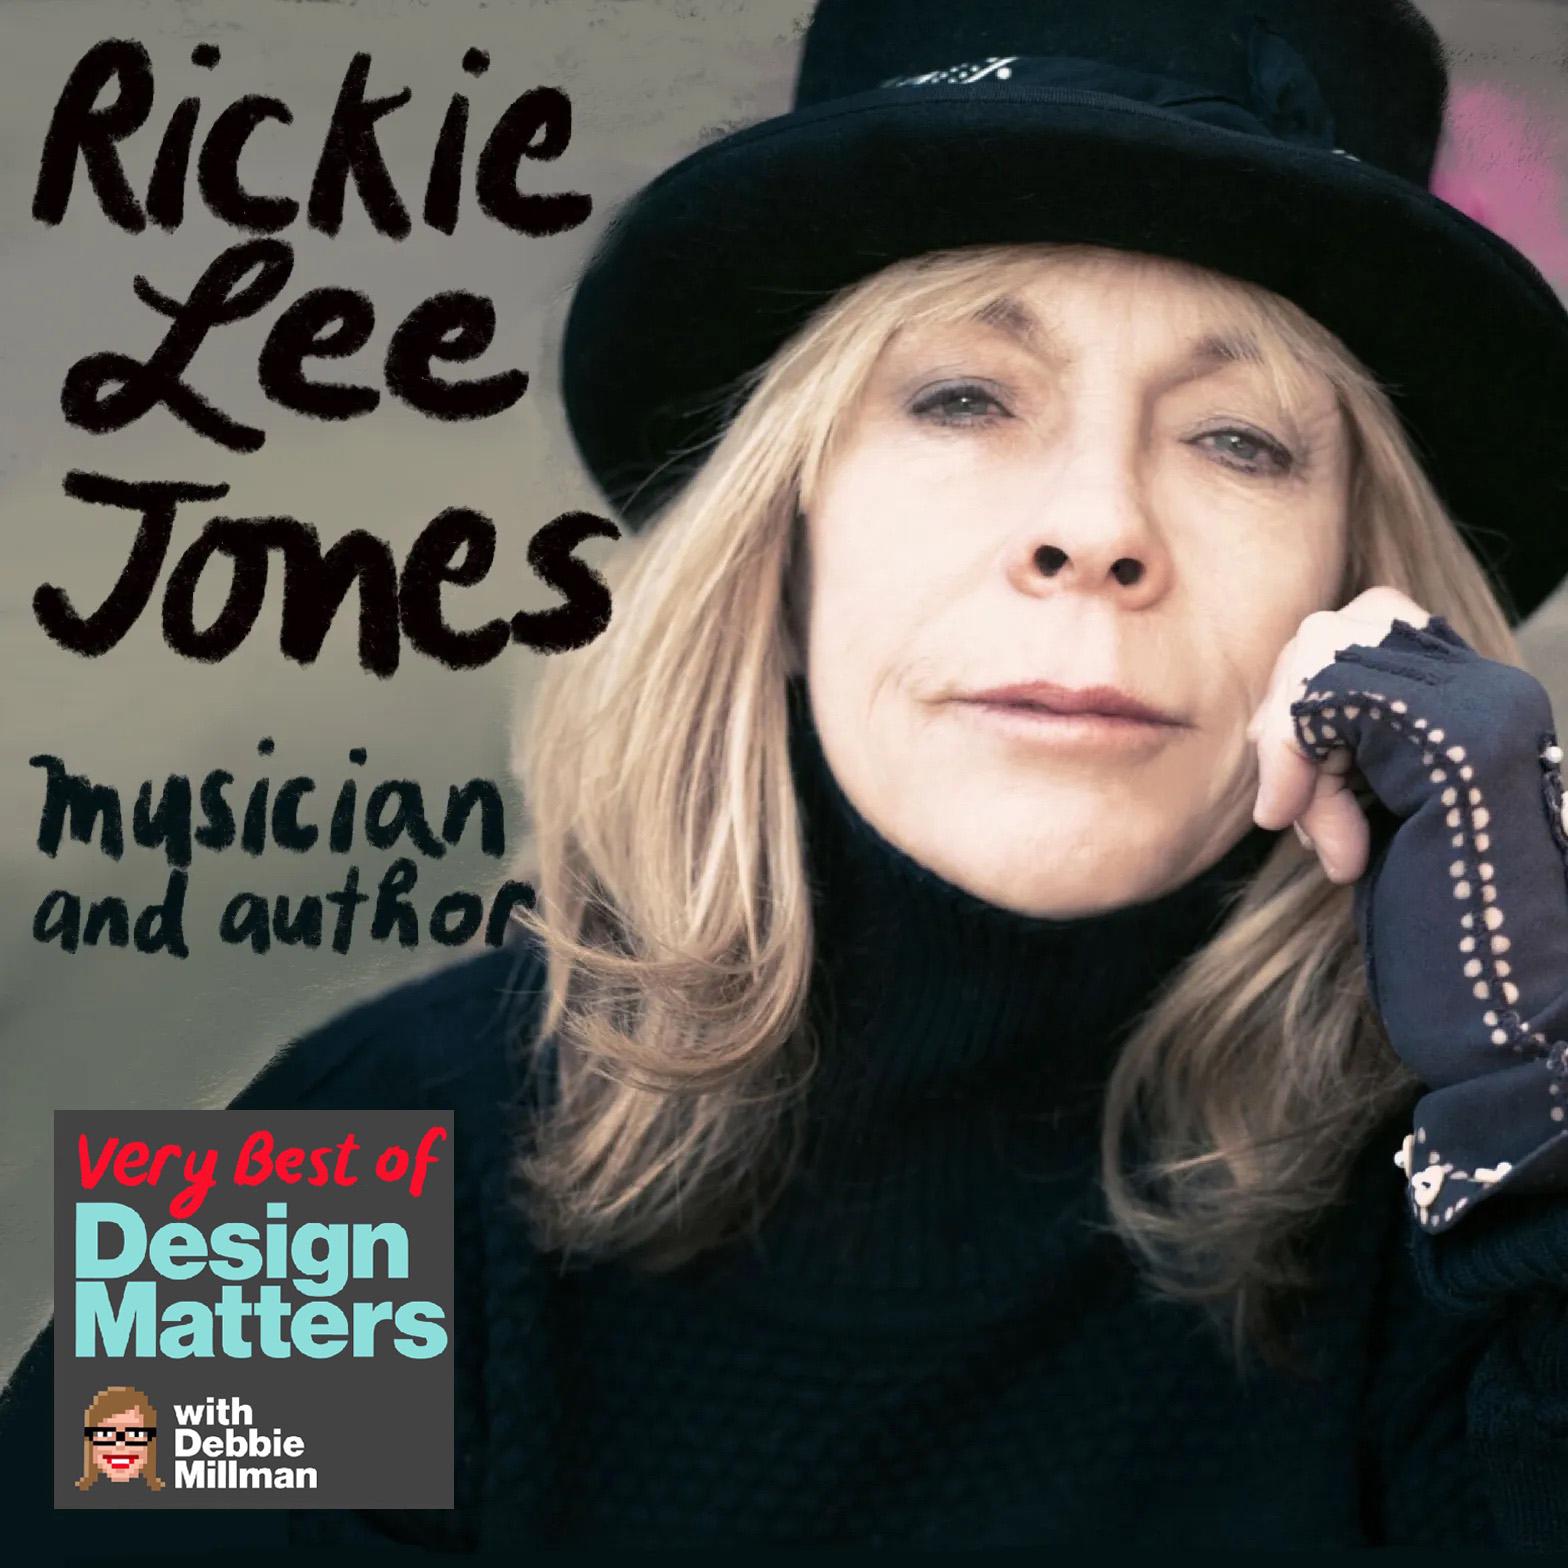 Thumbnail for "Best of Design Matters: Rickie Lee Jones".